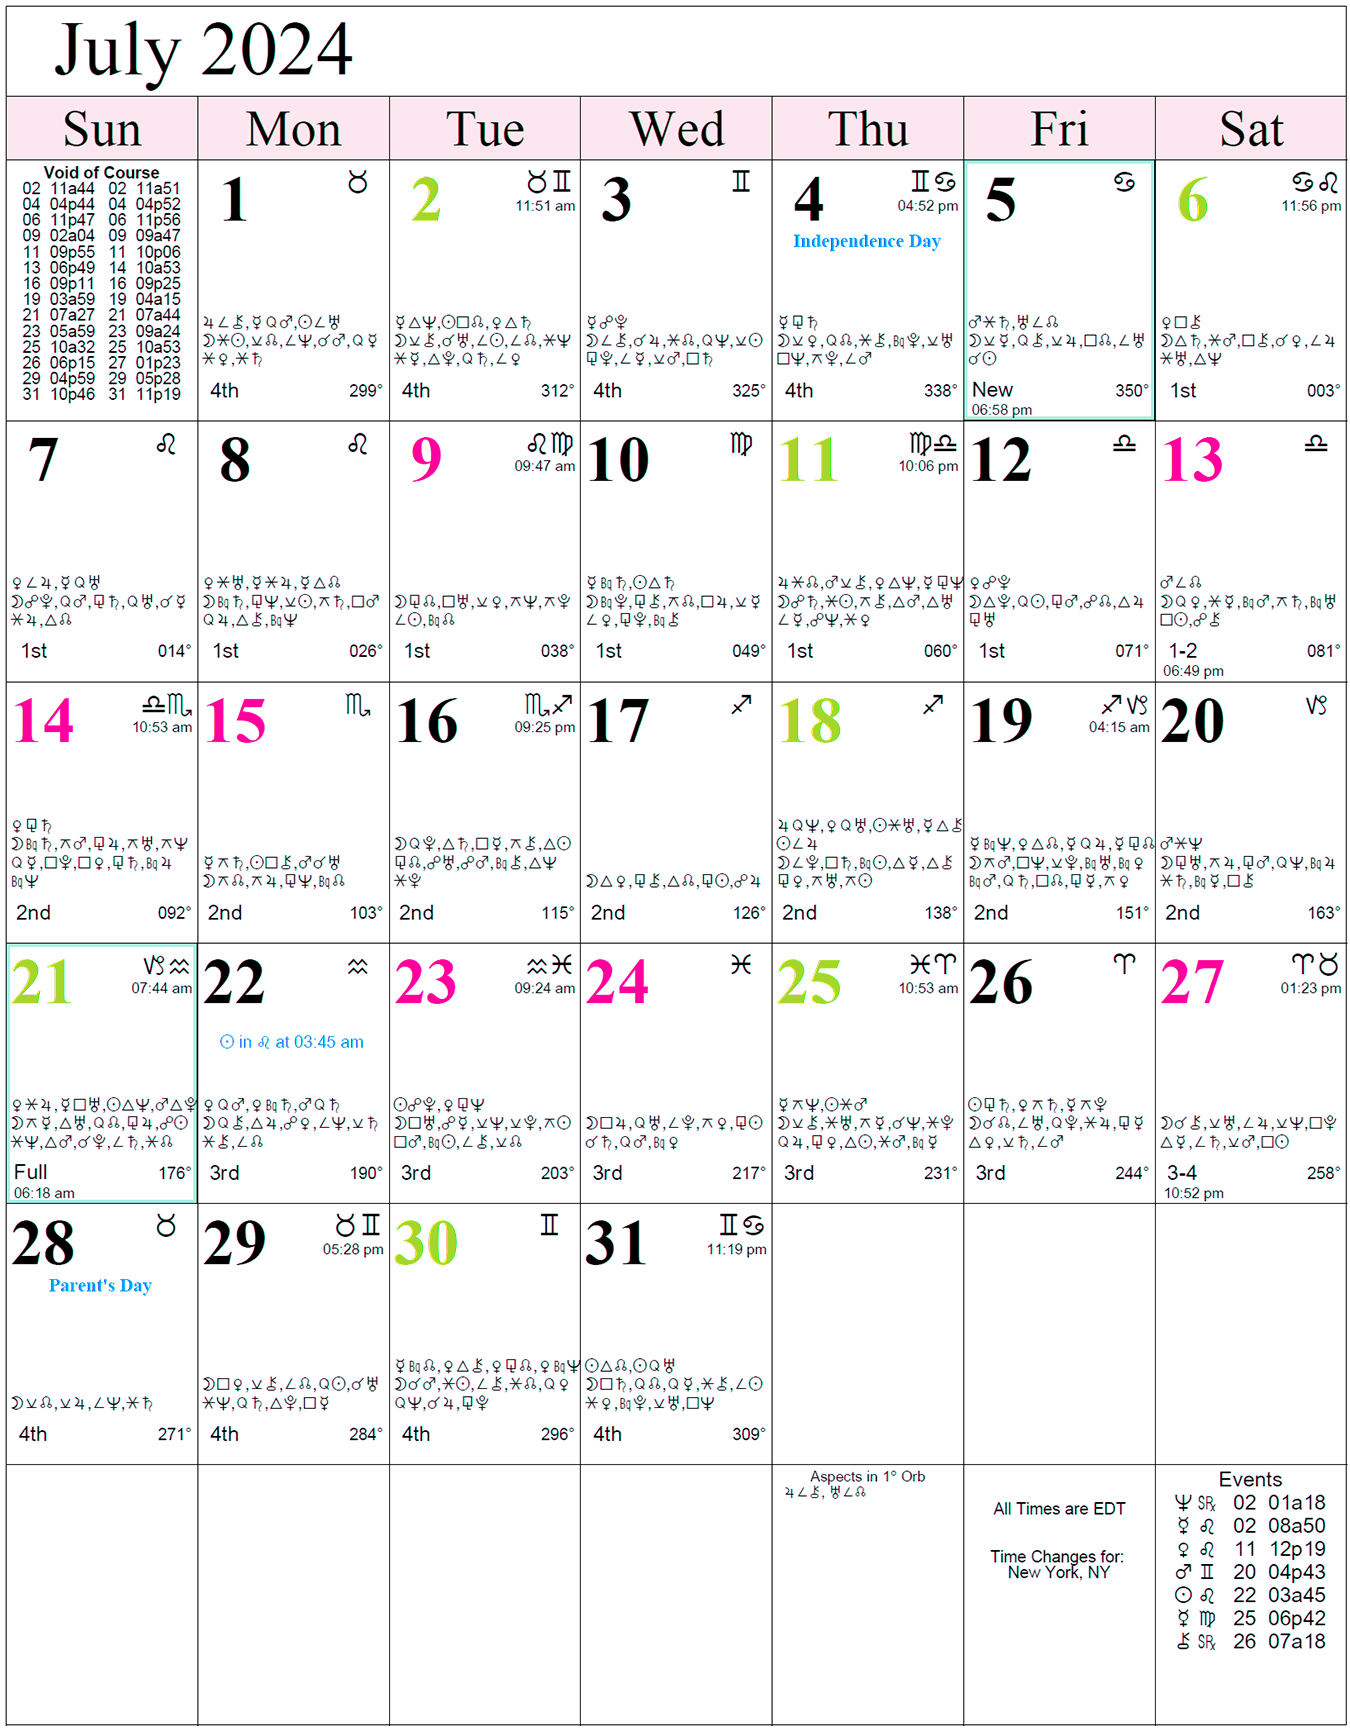 Calendar-July-2024 | Cafe Astrology with regard to July 2024 Astrology Calendar